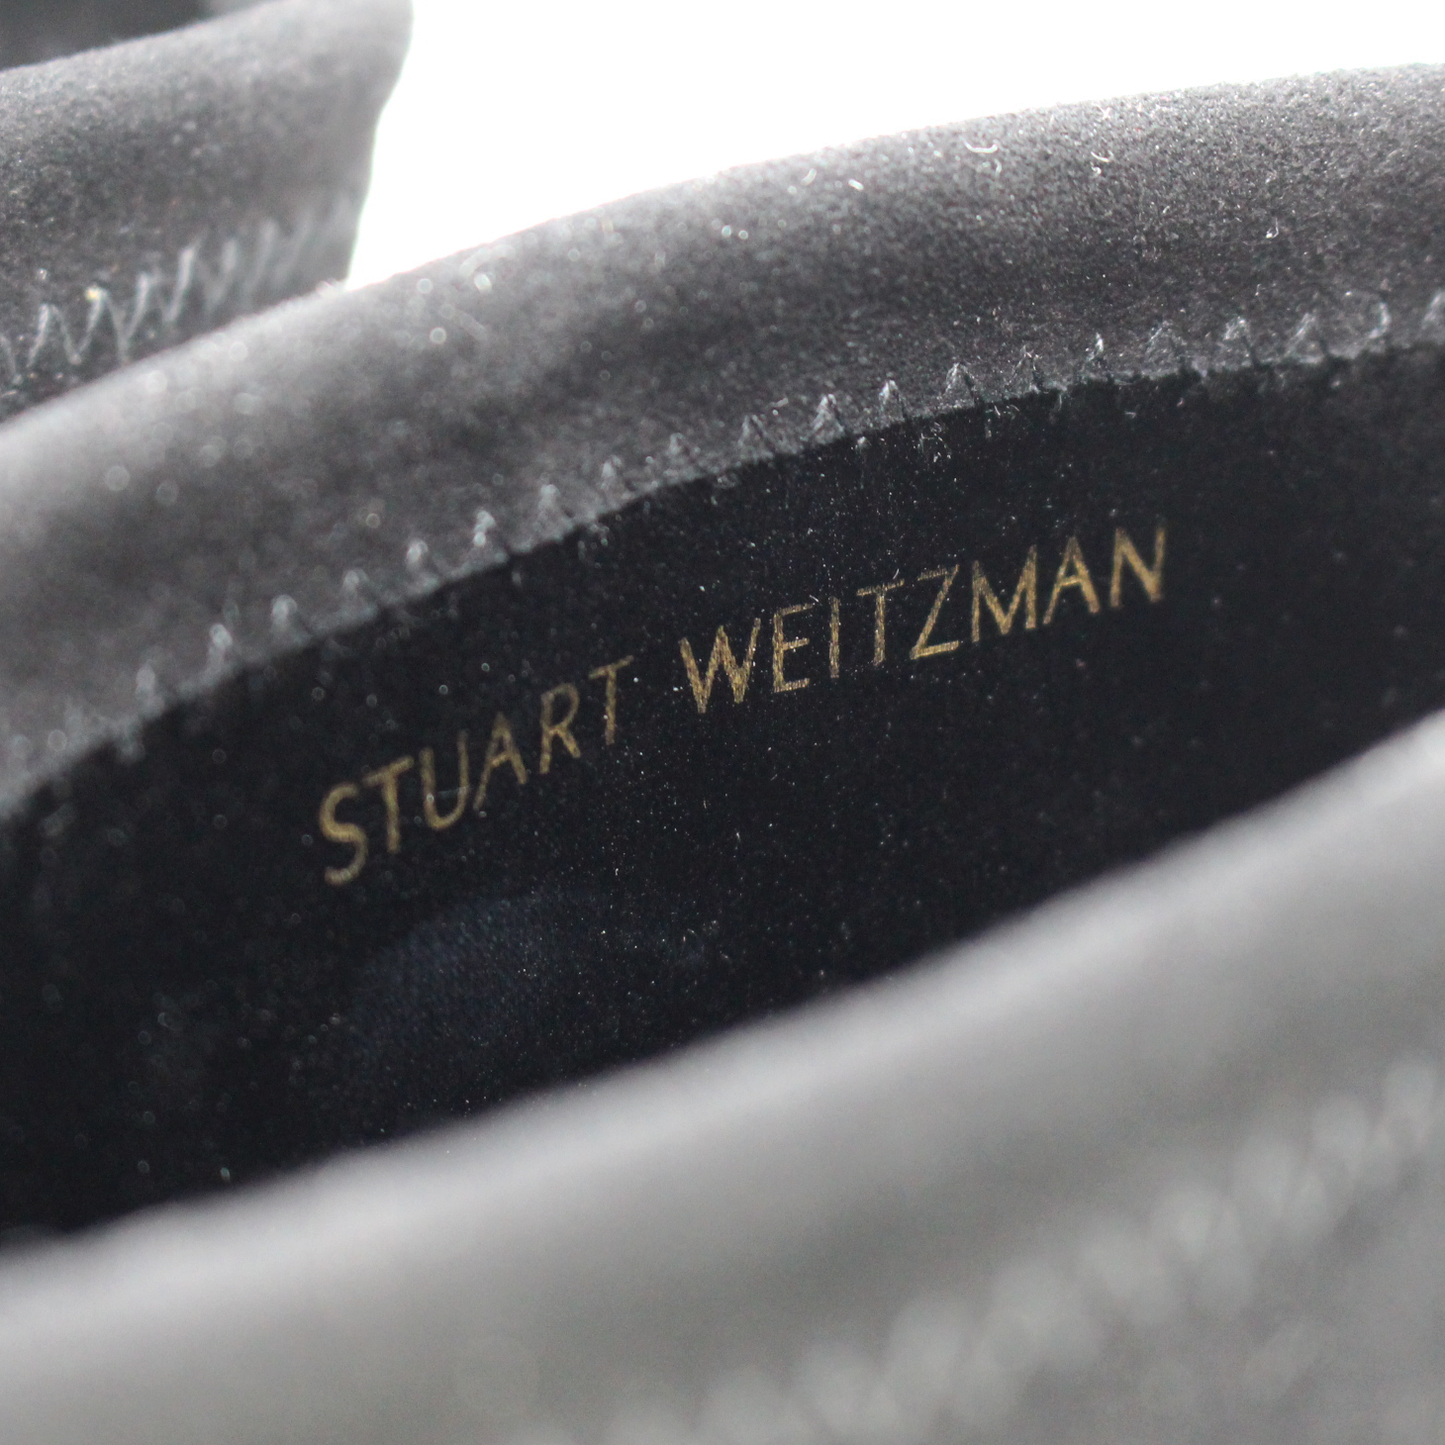 Stuart Weitzman Kneezie City Boots